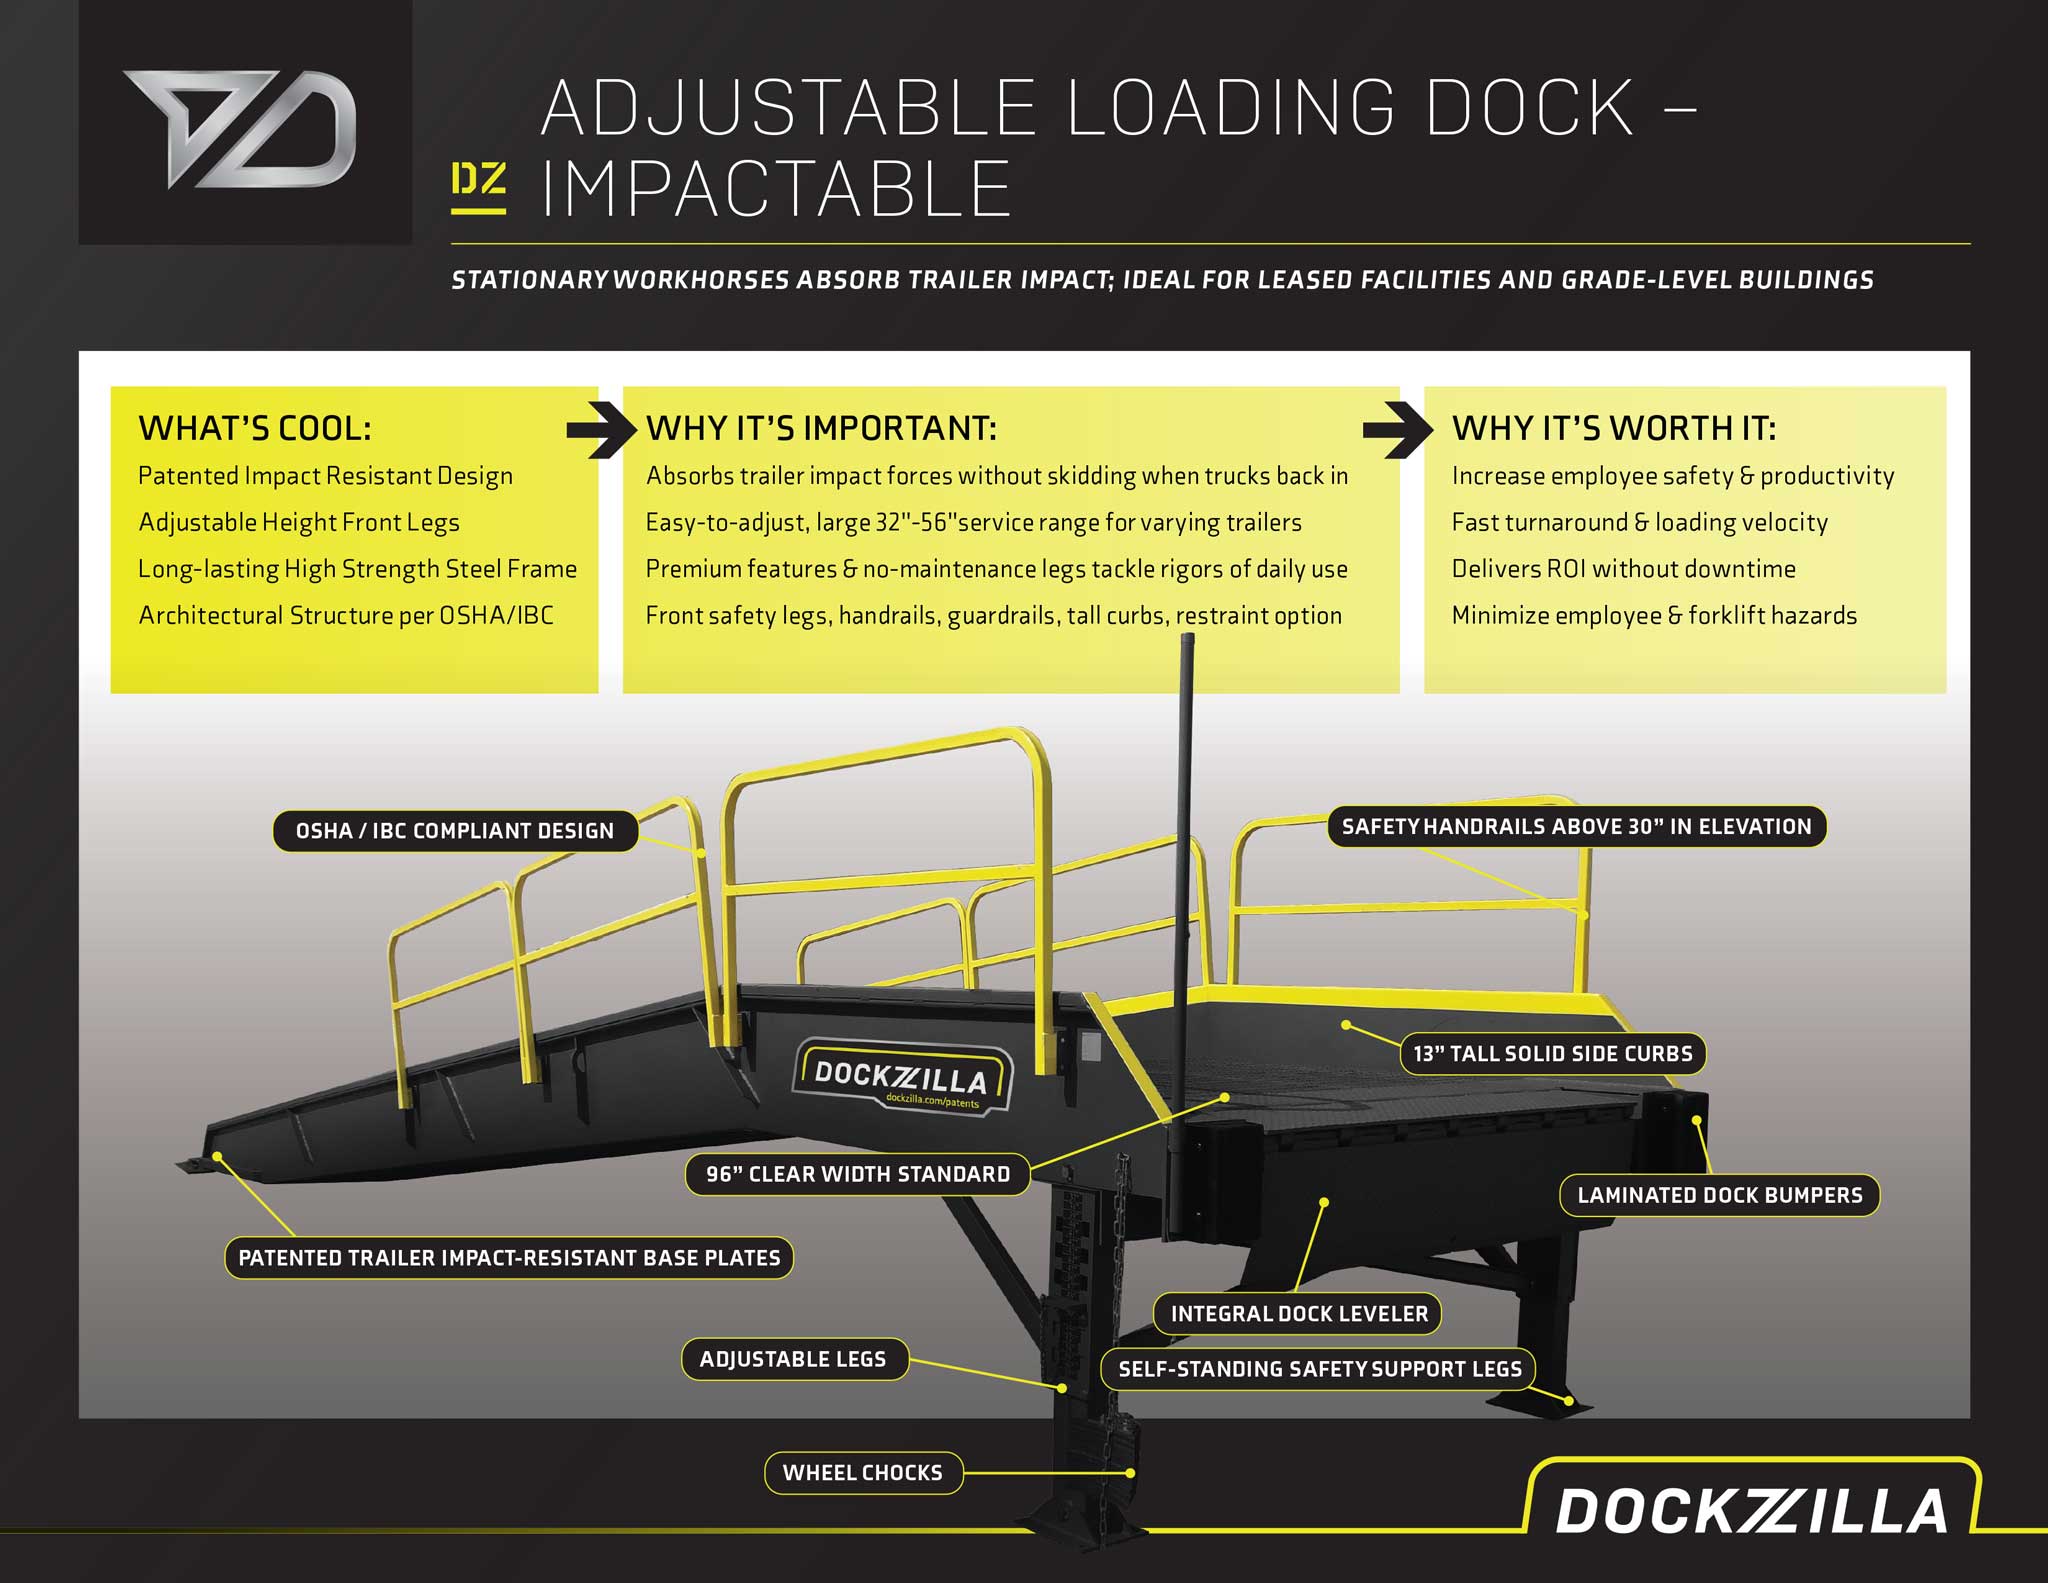 Dockzilla-Adjustable-Loading-Dock-Impactable